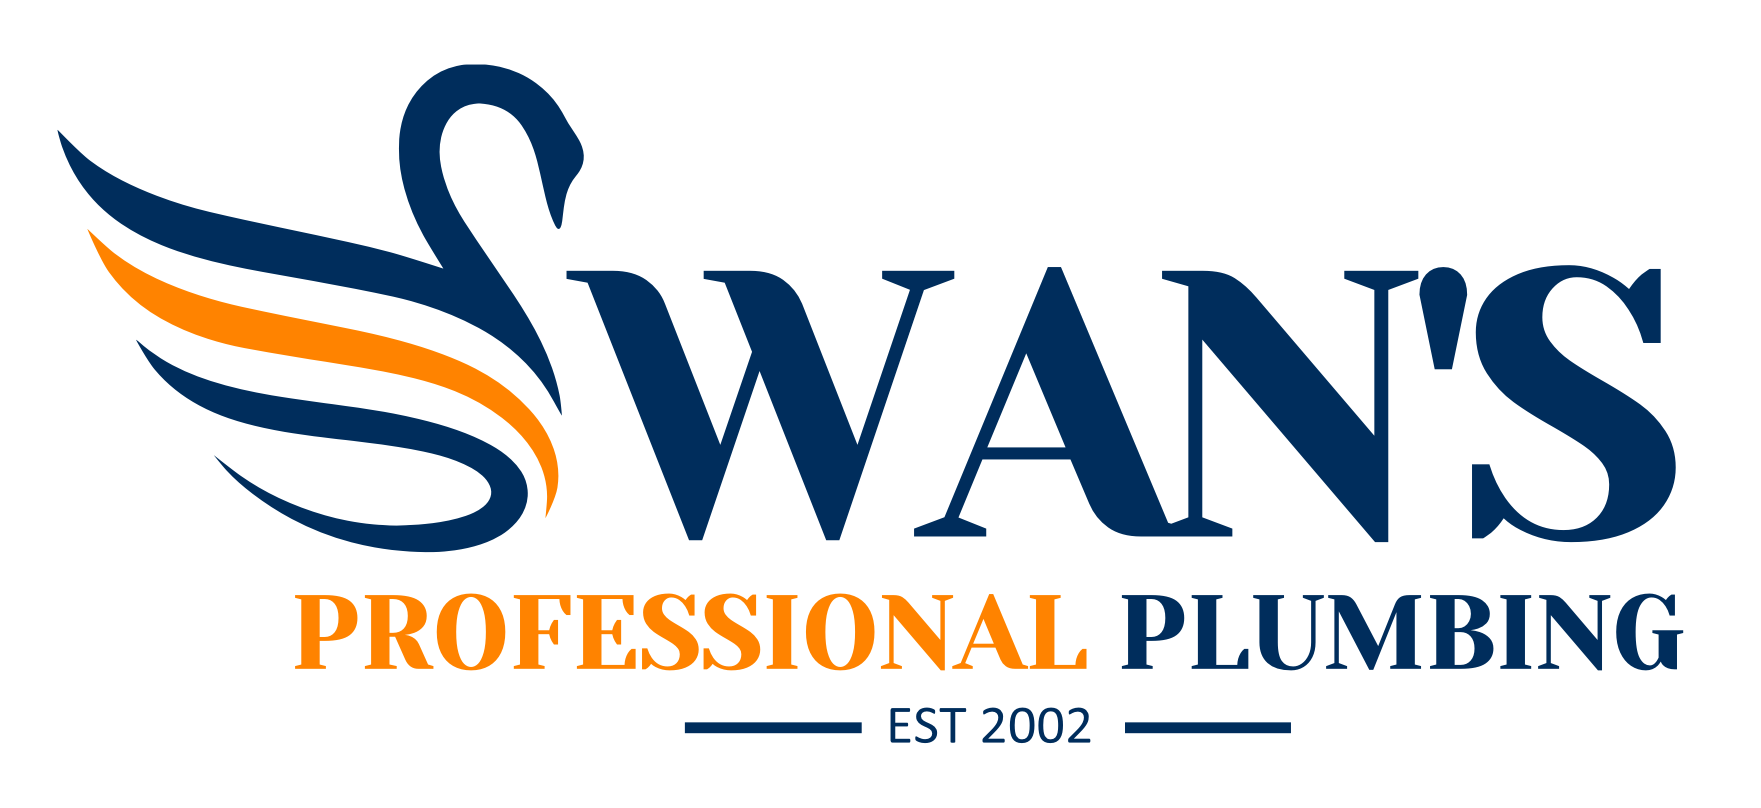 Swans Plumbing